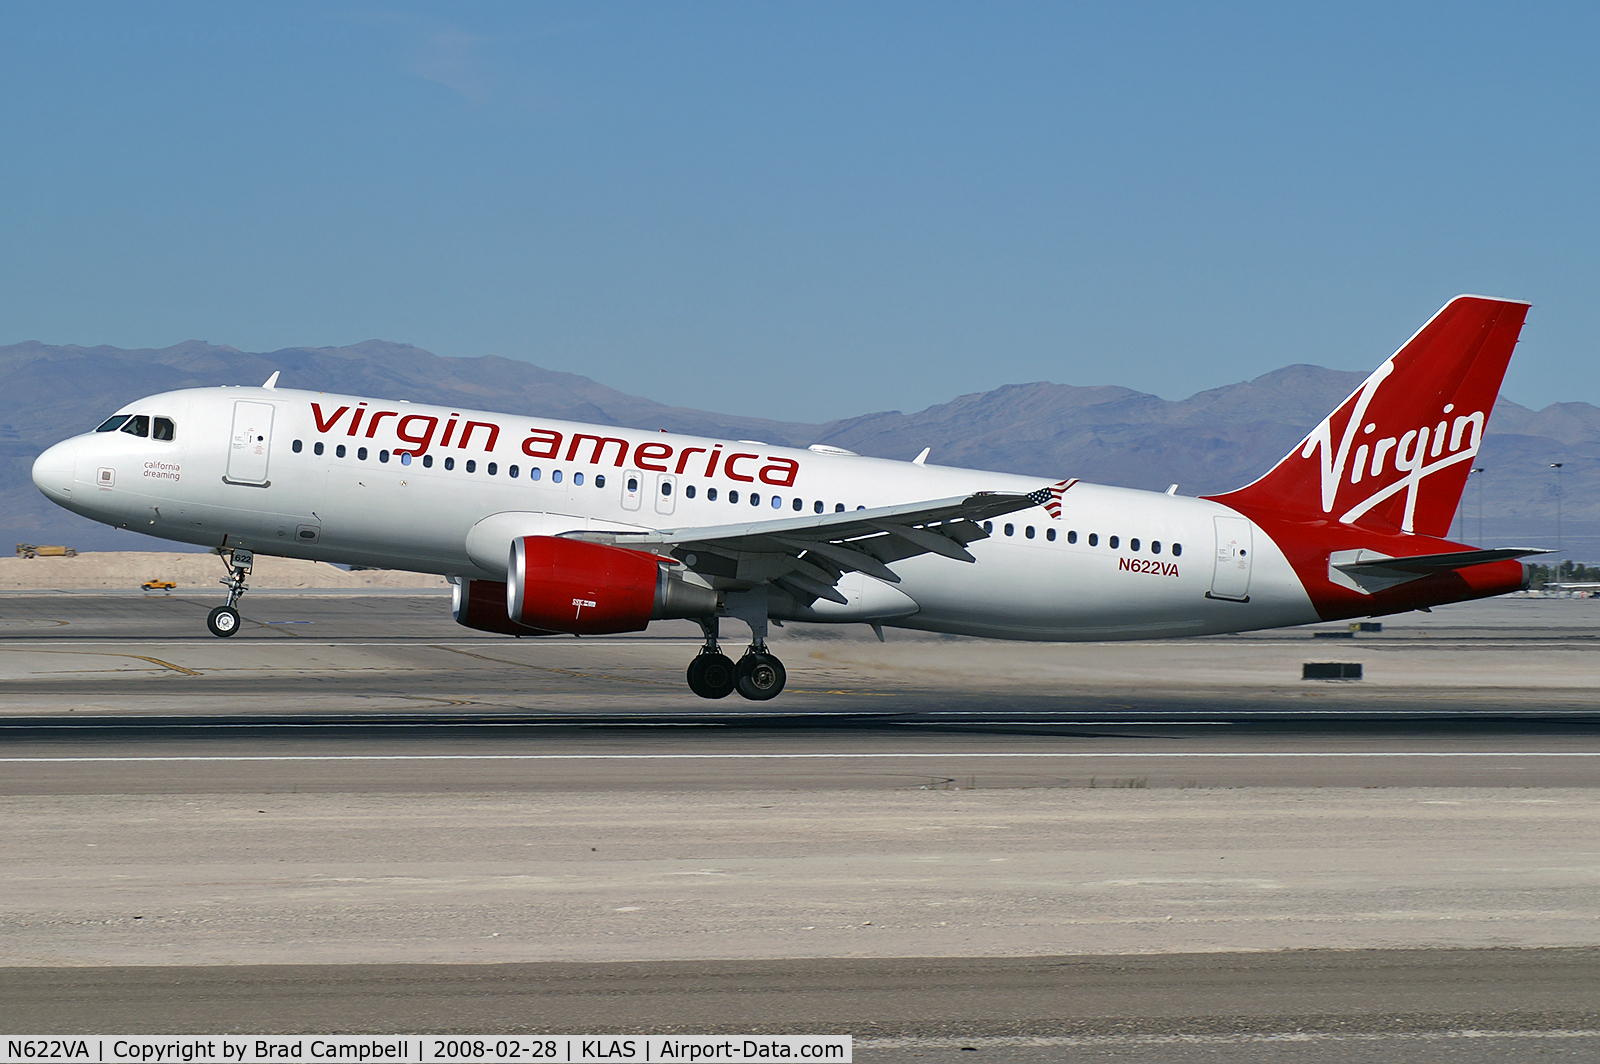 N622VA, 2006 Airbus A320-214 C/N 2674, Virgin America - 'California Dreaming' / 2006 Airbus A320-214